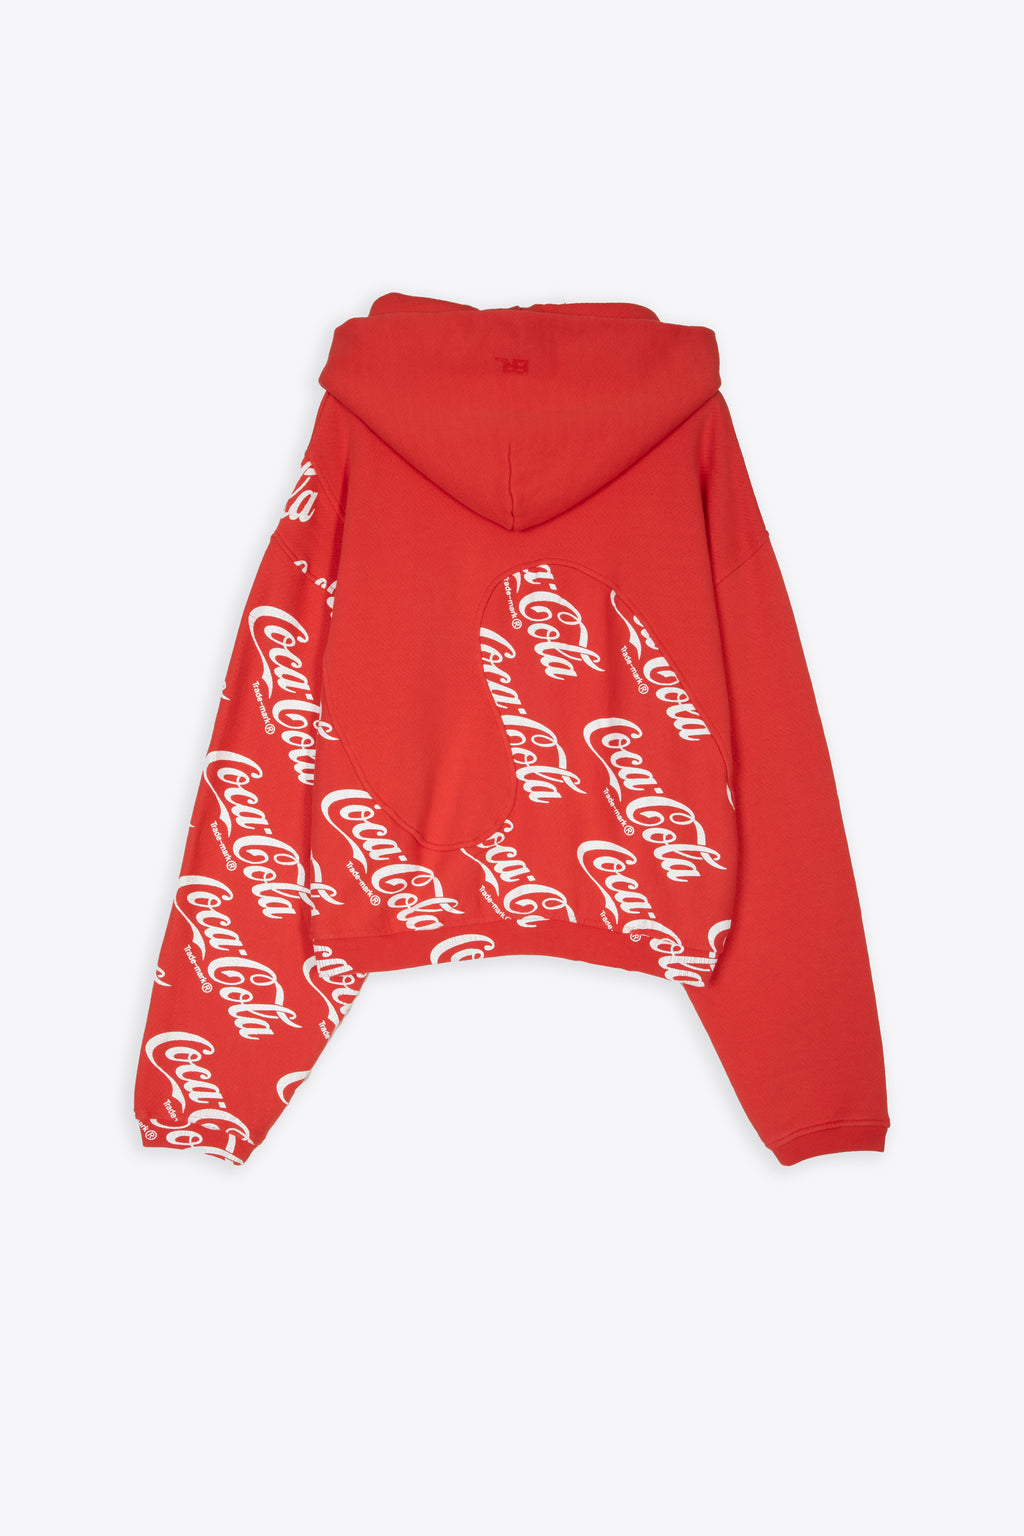 alt-image__Red-Coca-Cola-swirl-hoodie---Men-Coca-Cola-Swirl-Hoodie-Knit-